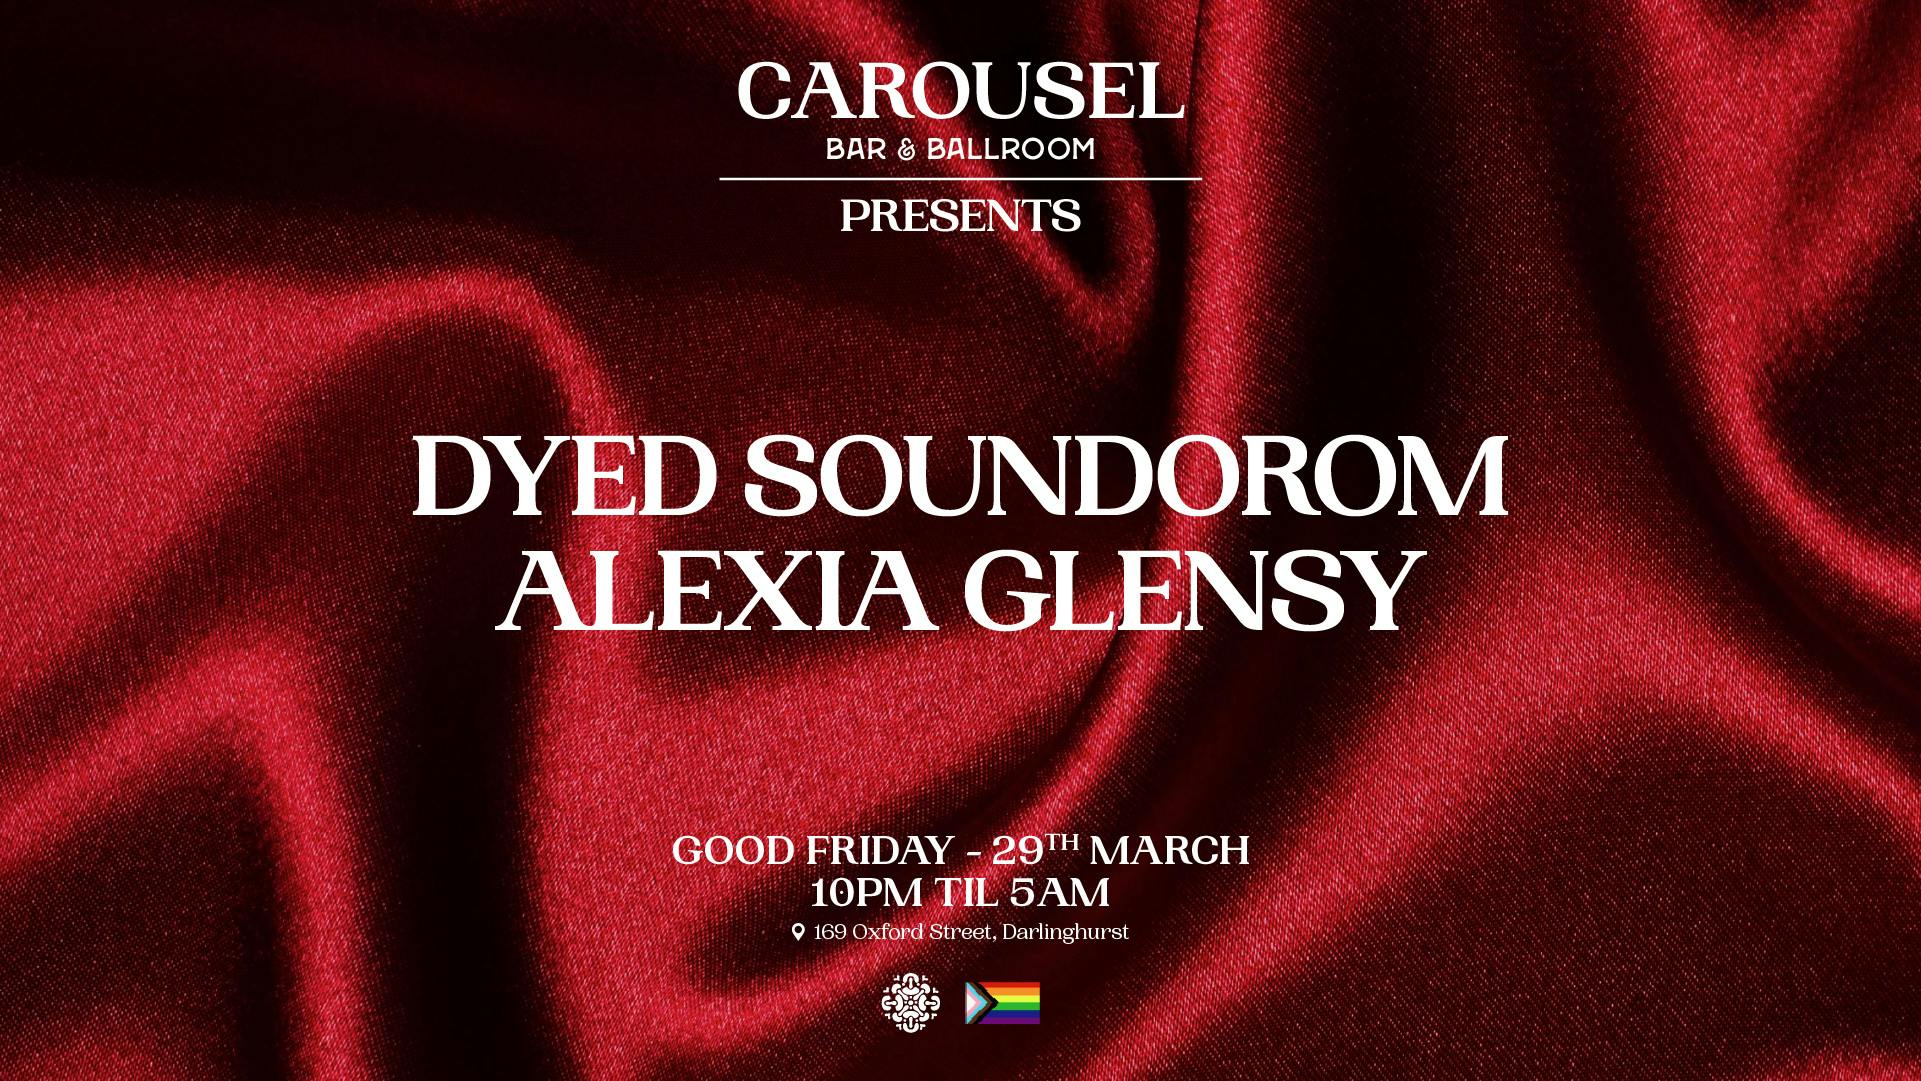 Carousel Presents - Dyed Soundorom & Alexia Glensy - Good Friday 29th March